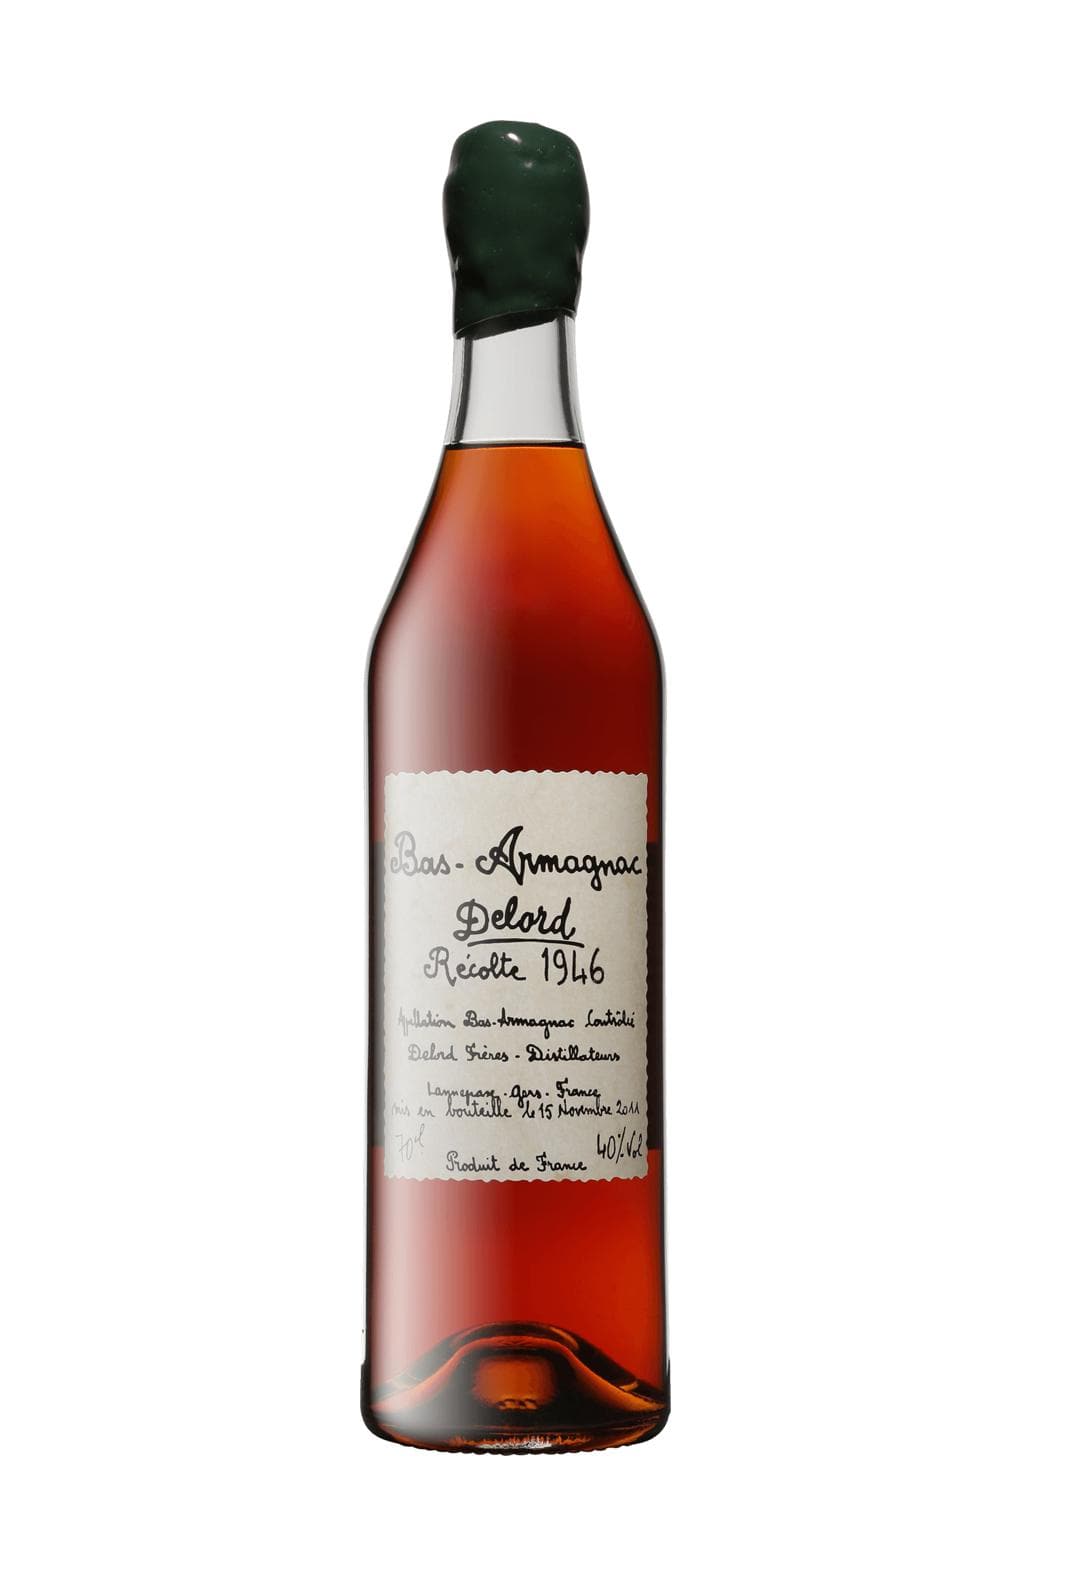 Delord 1946 Bas Armagnac 40% 700ml | Brandy | Shop online at Spirits of France